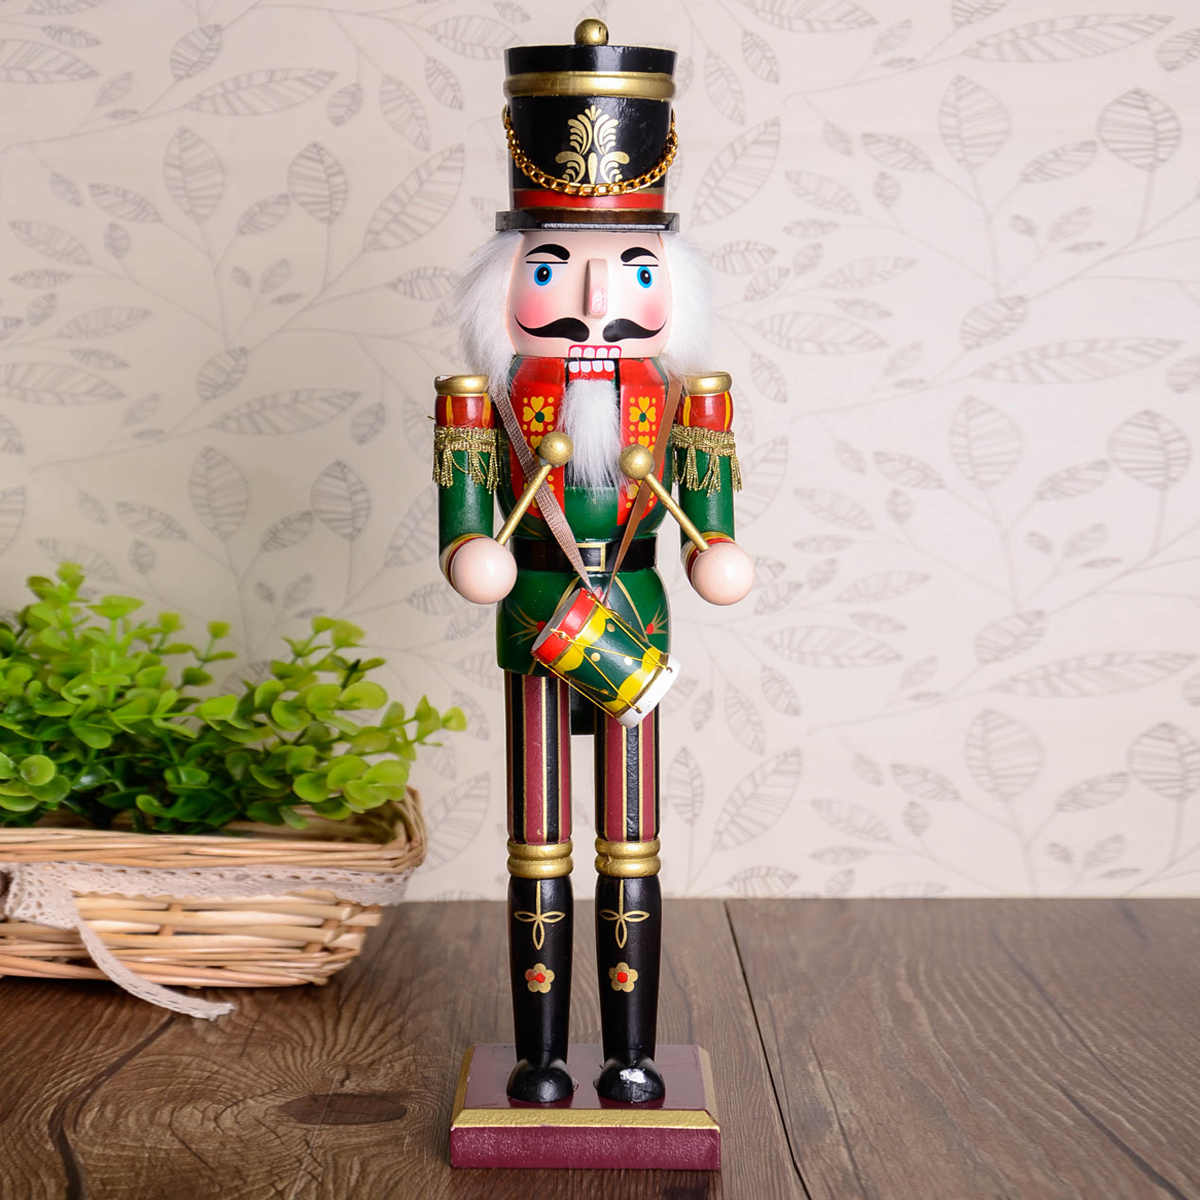 30cm-Wooden-Nutcracker-Doll-Soldier-Vintage-Handcraft-Decoration-Christmas-Gifts-1236558-6